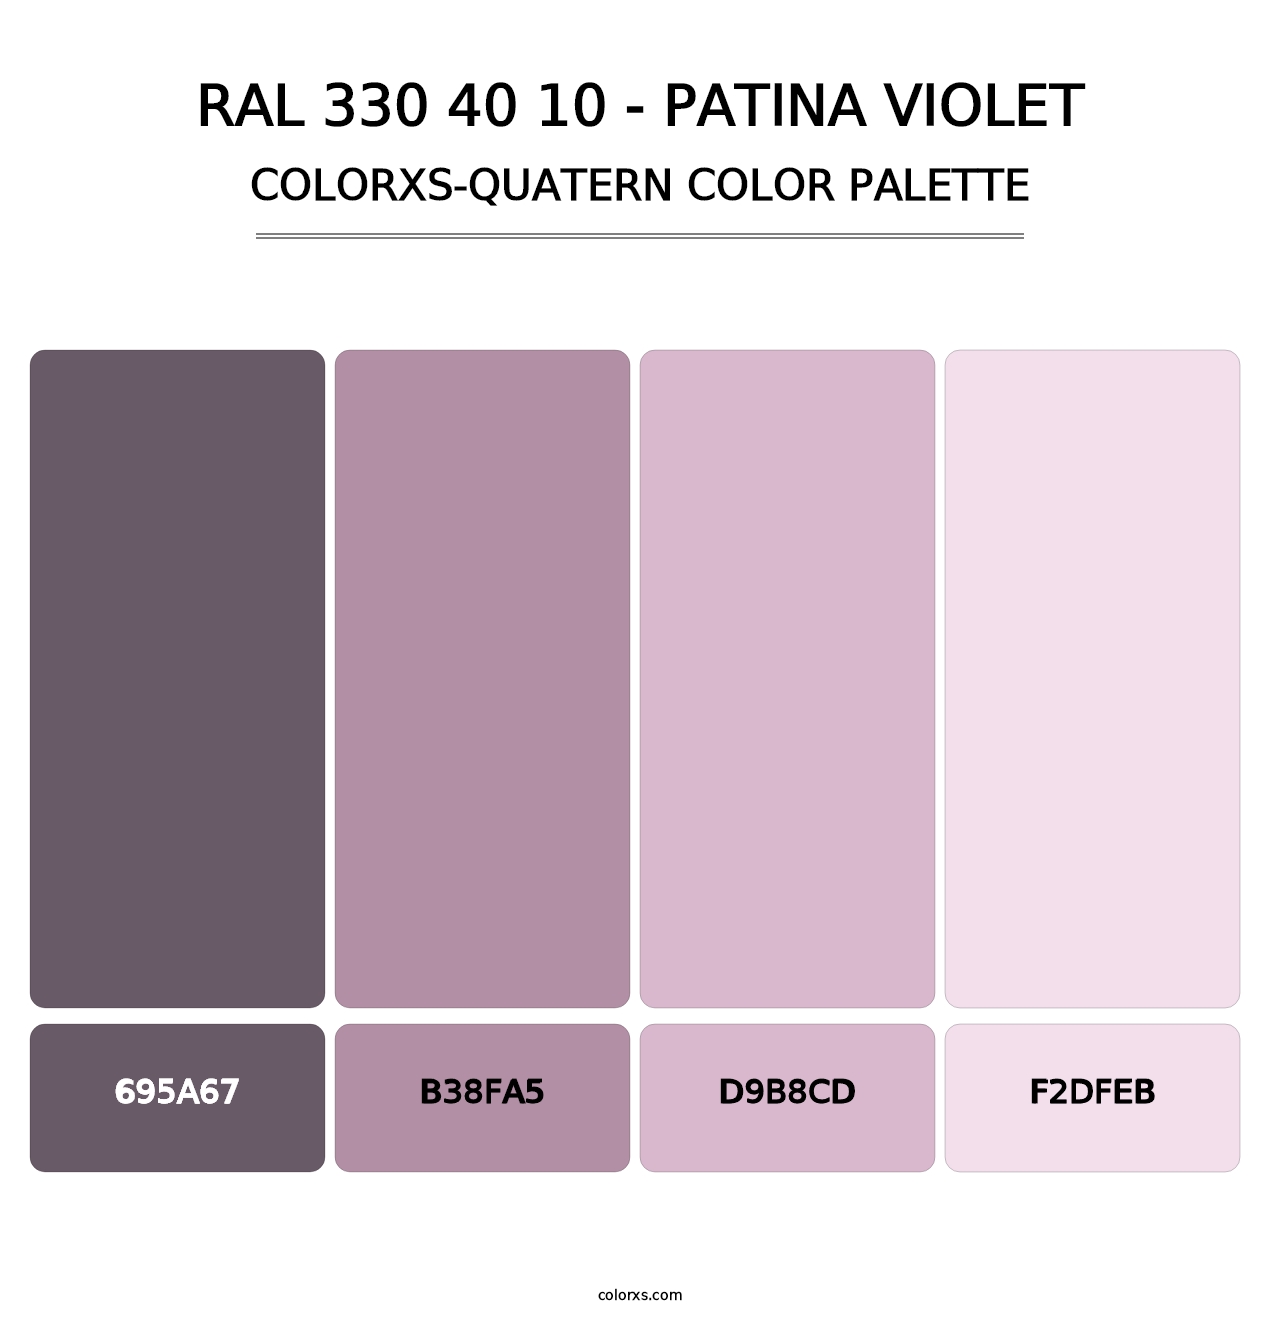 RAL 330 40 10 - Patina Violet - Colorxs Quatern Palette